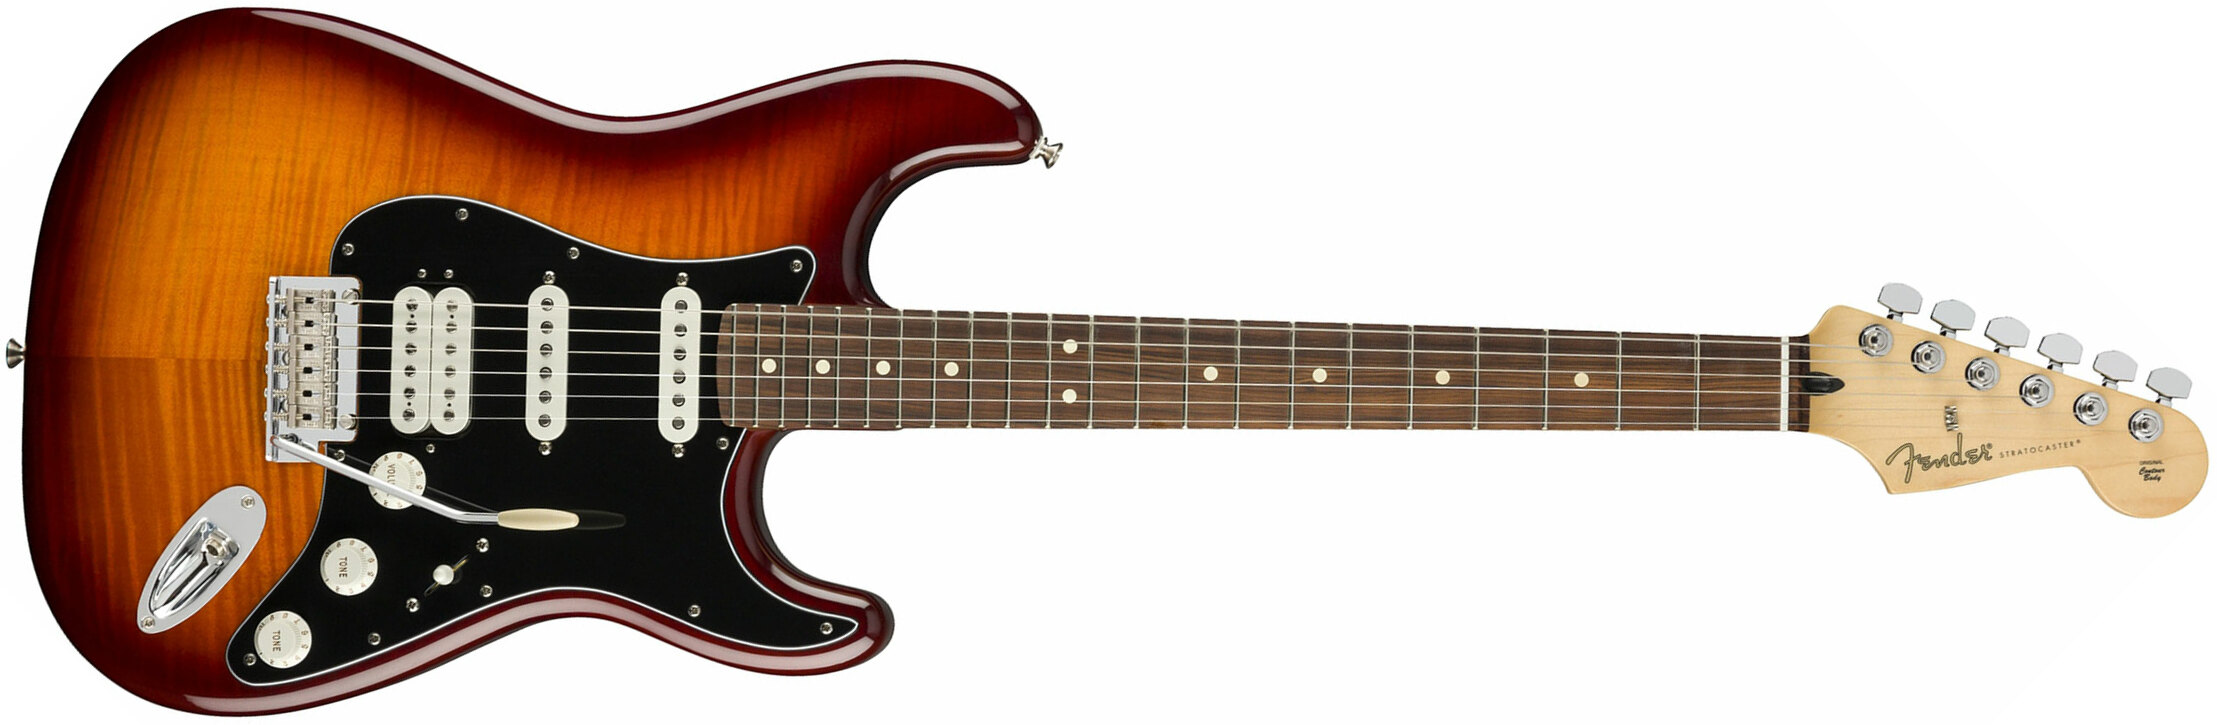 Fender Strat Player Plus Top Mex Hss Pf - Tobacco Burst - E-Gitarre in Str-Form - Main picture